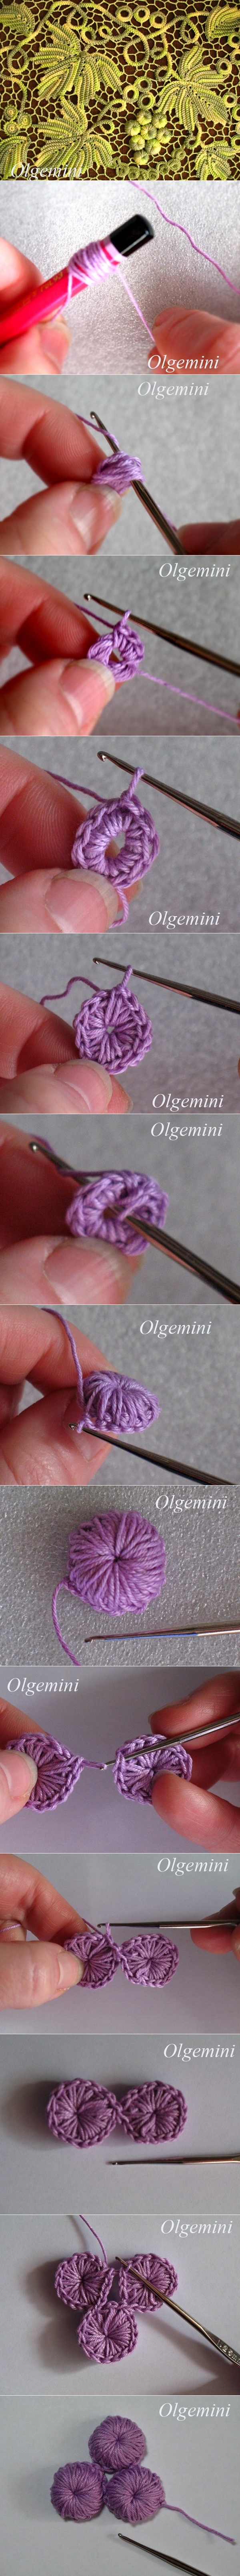 crochet-grape-pattern-tutorials